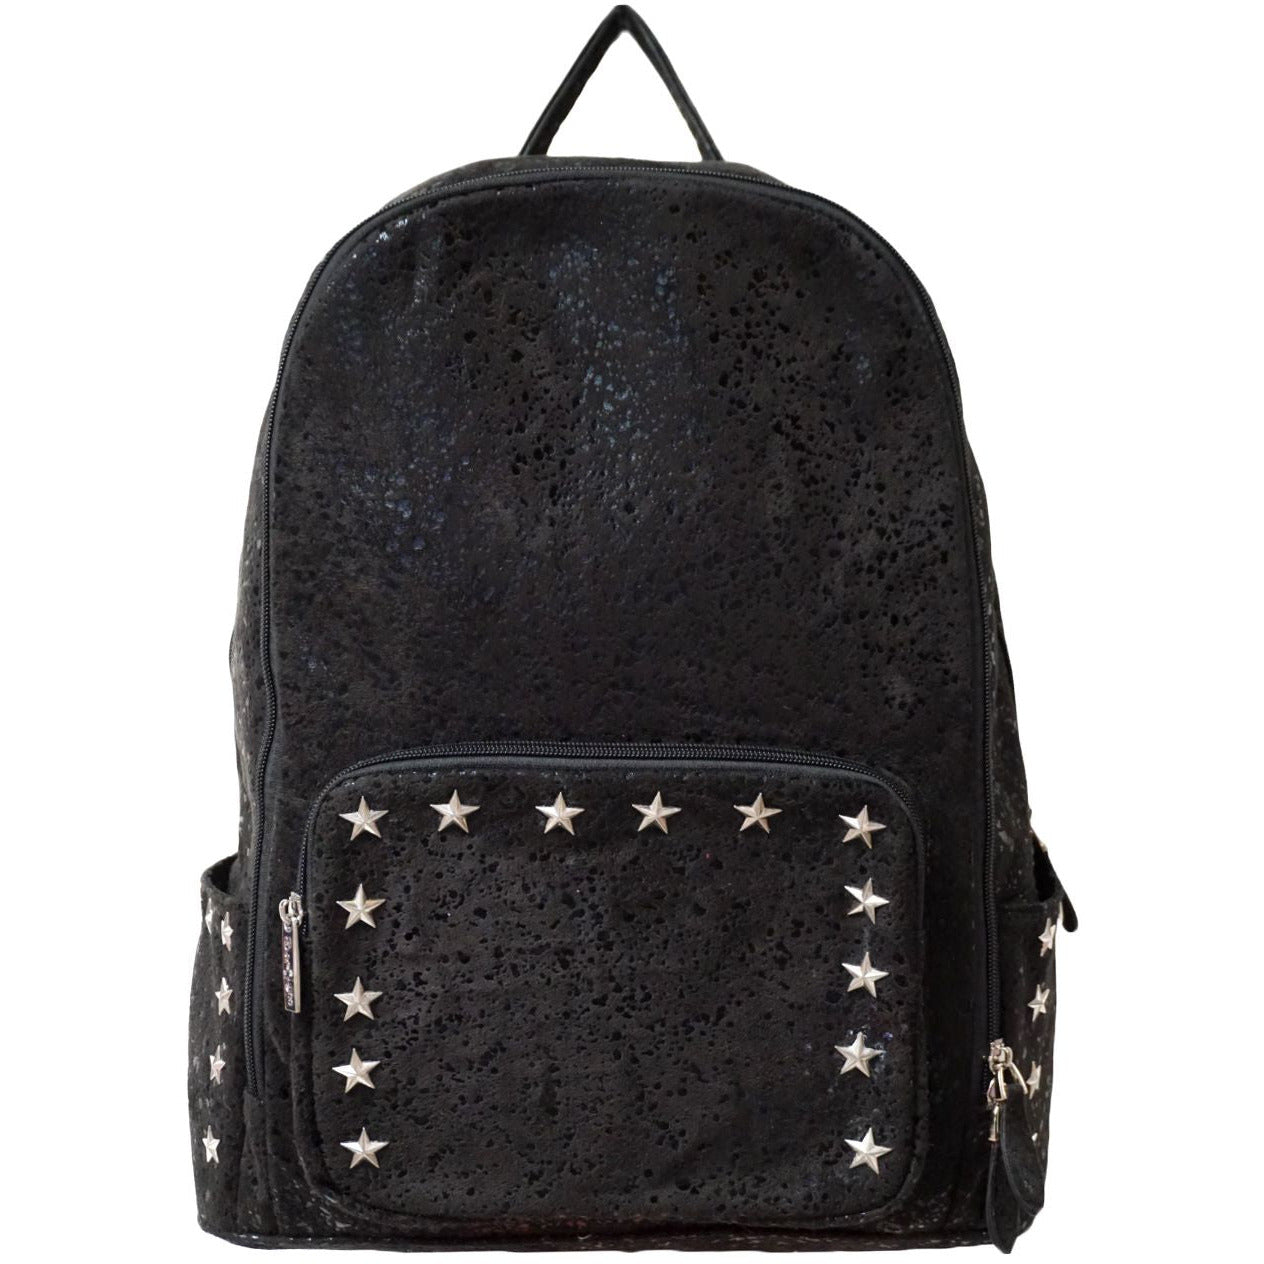 Star Studded Black Backpack